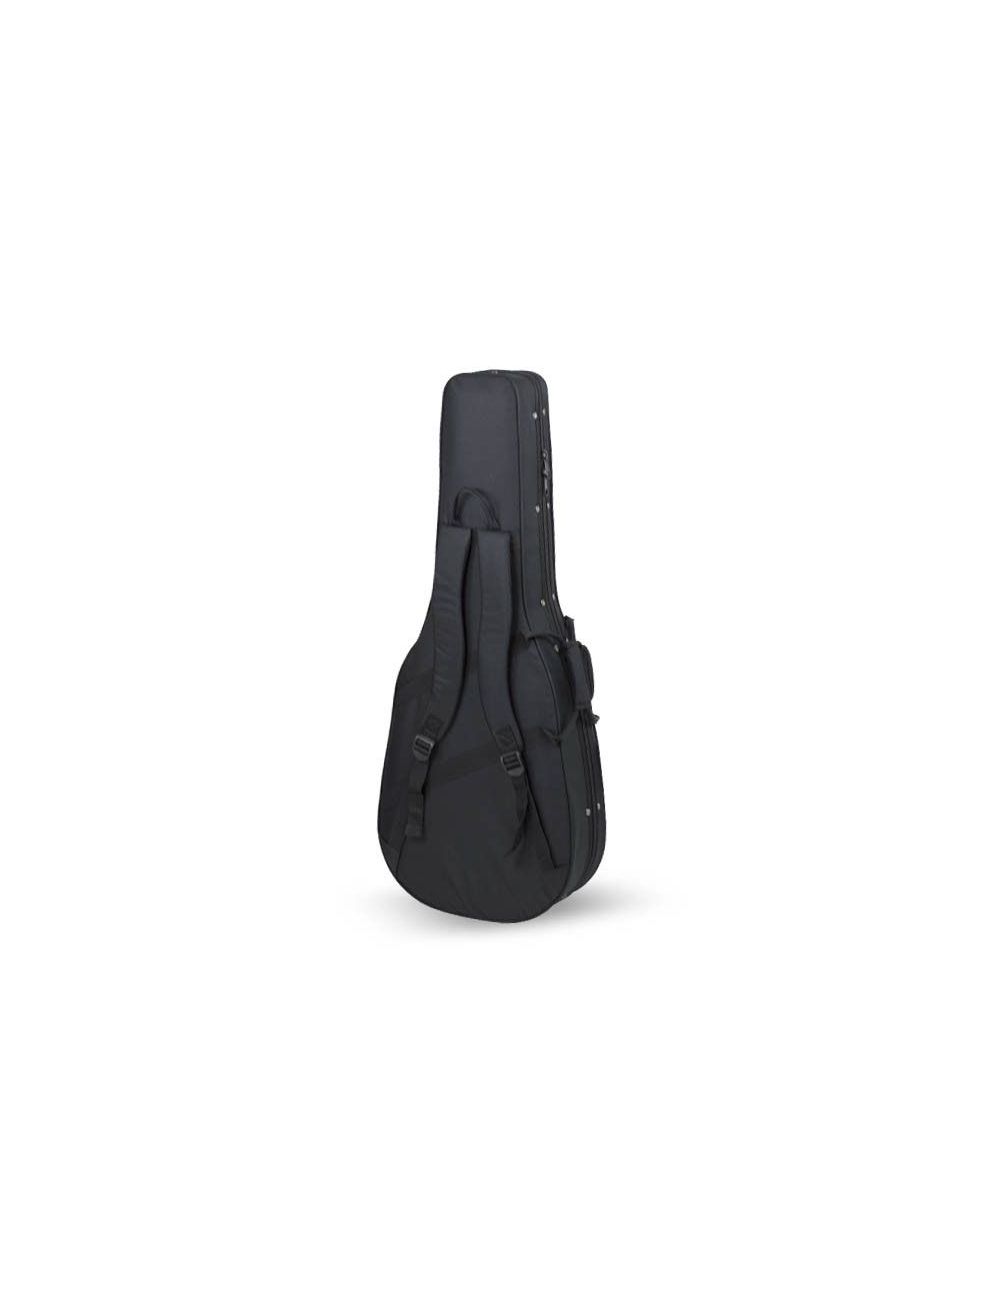 Ortola 7907 Etui guitare classique en polystyrène